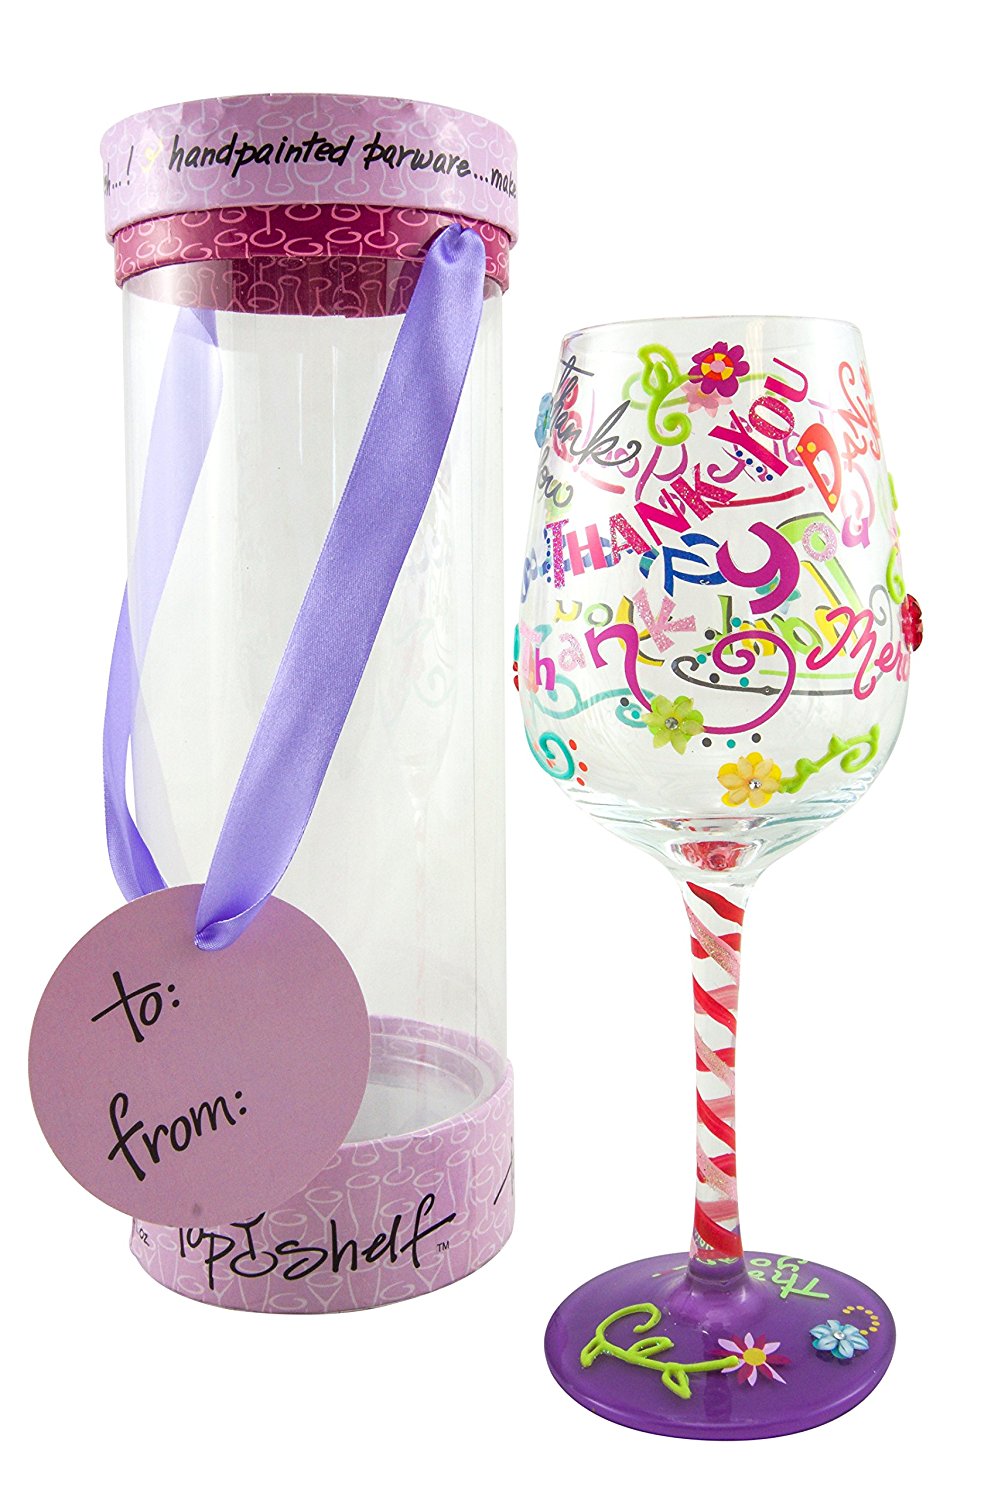 unique hostess gift ideas  - wine bottle umbrella